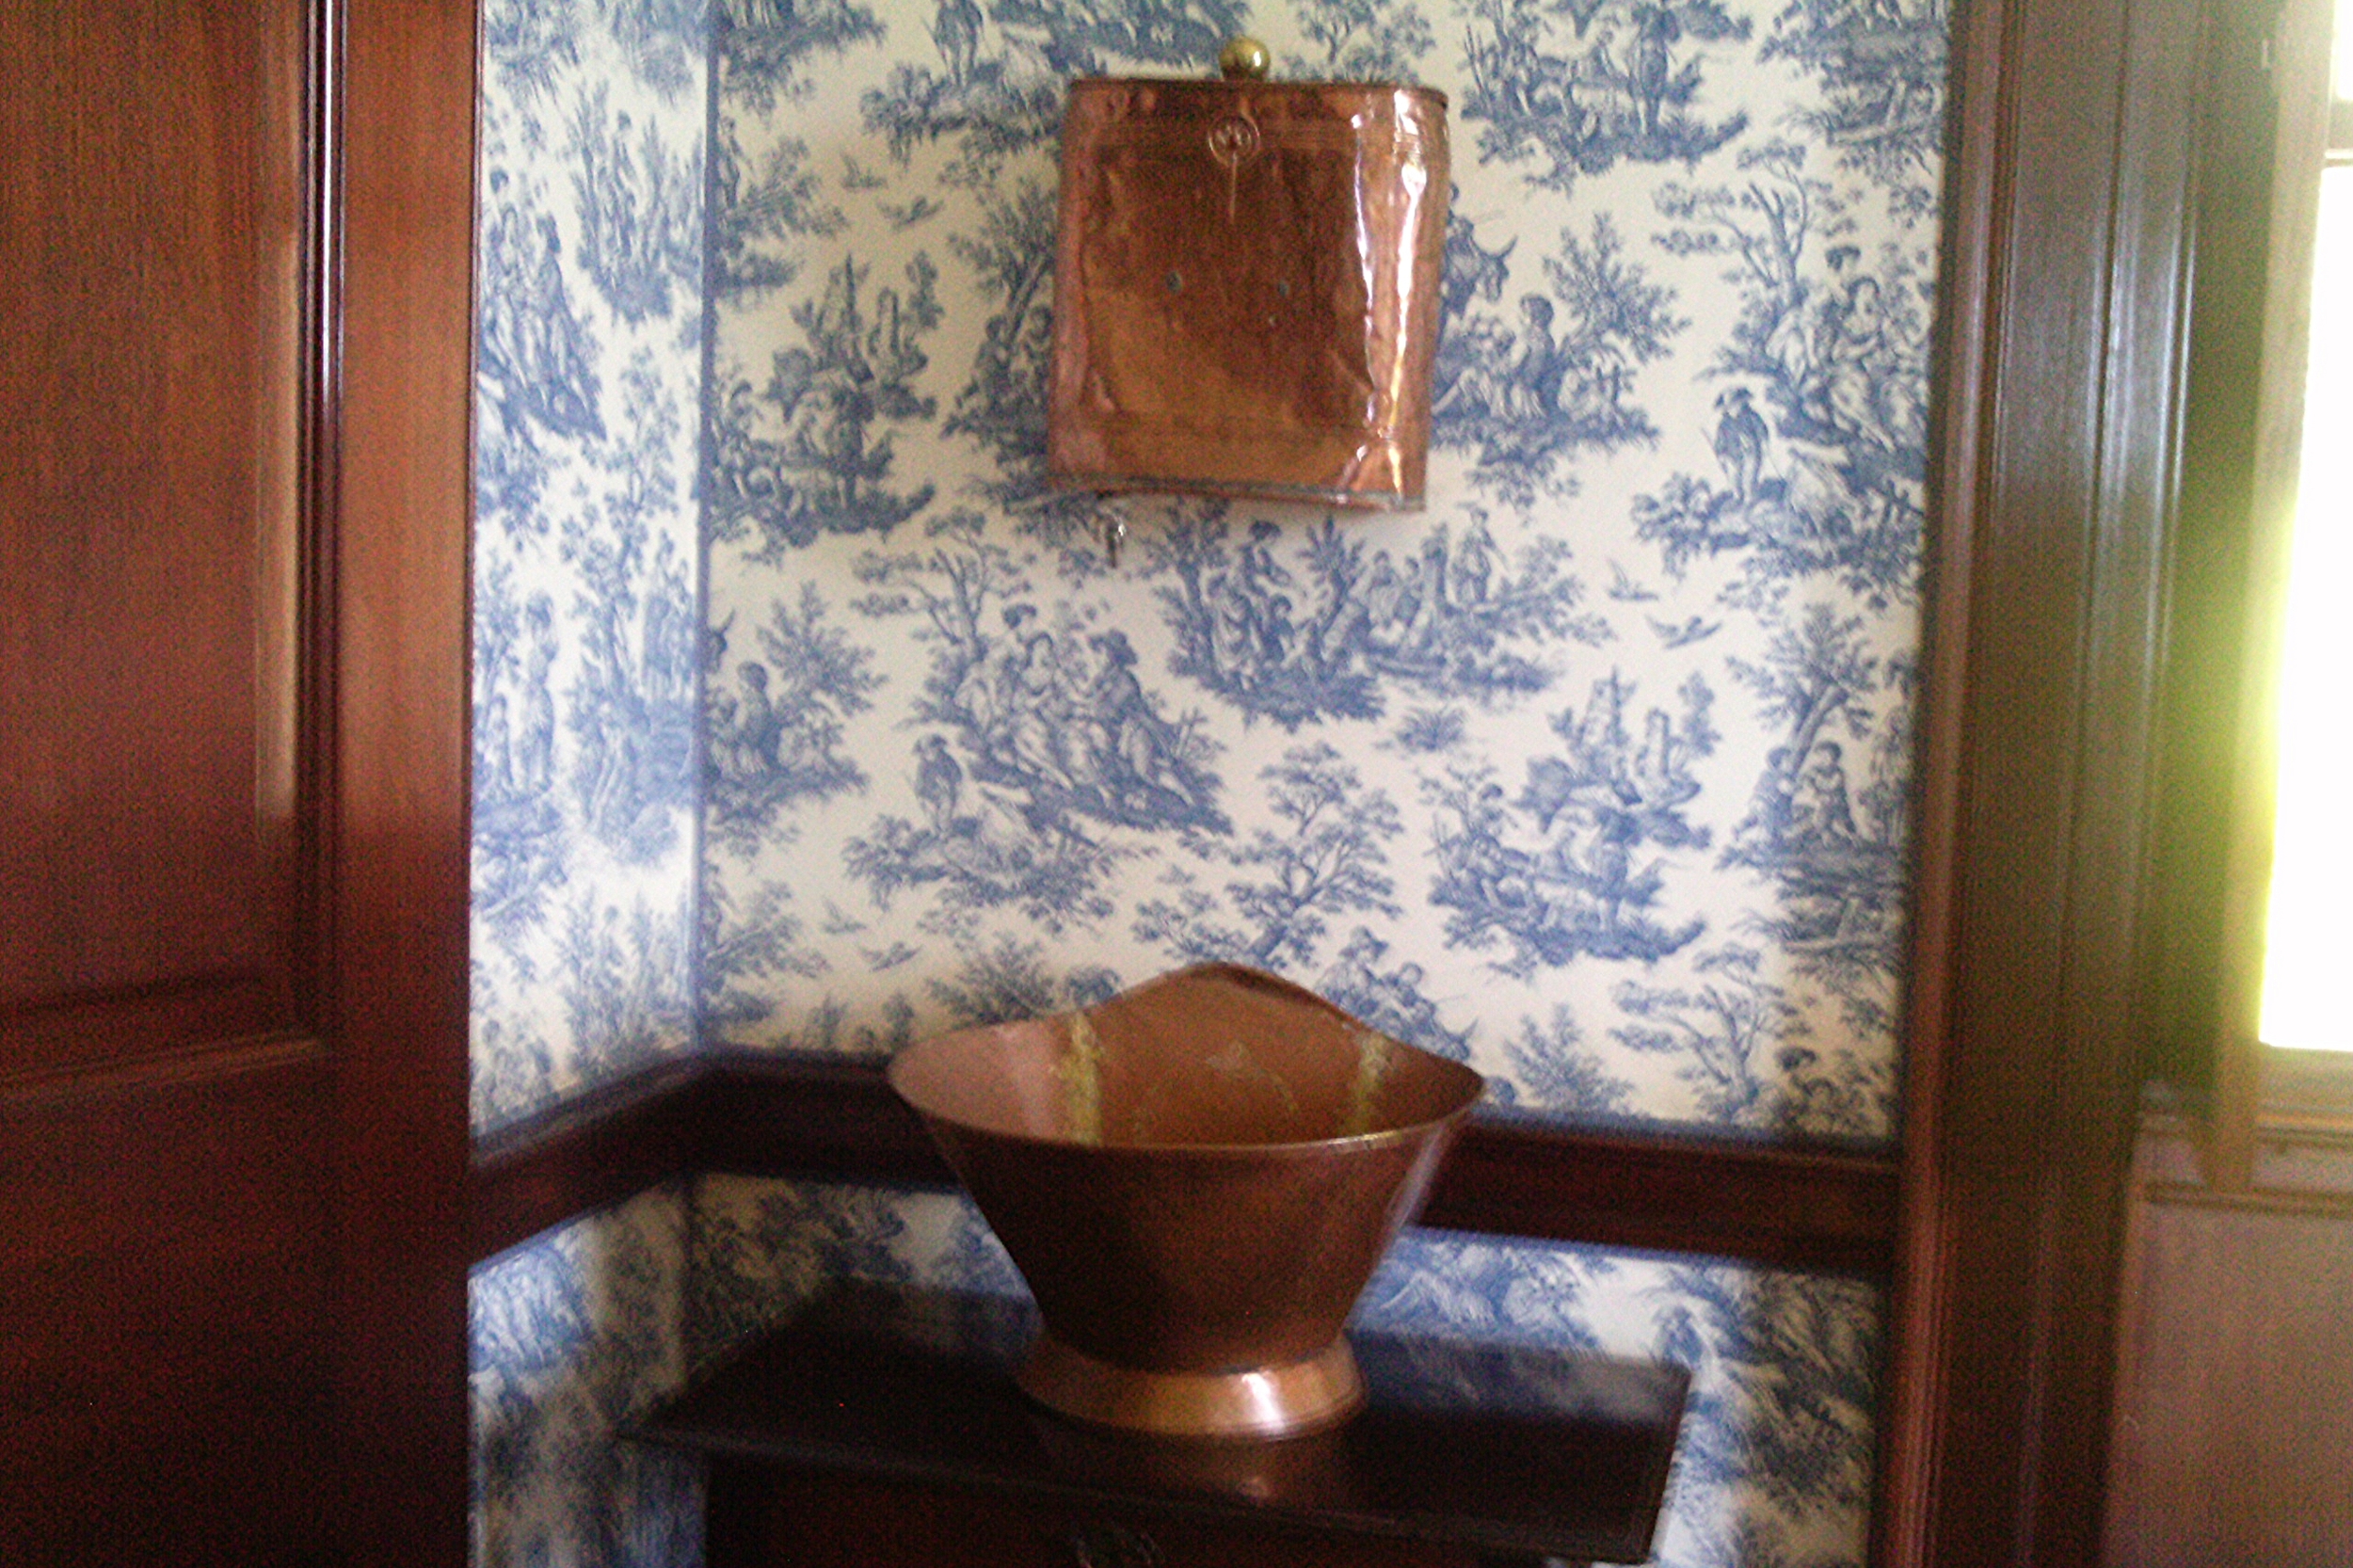 Rose Hall copper wash basin & possibly a medicine cabinet